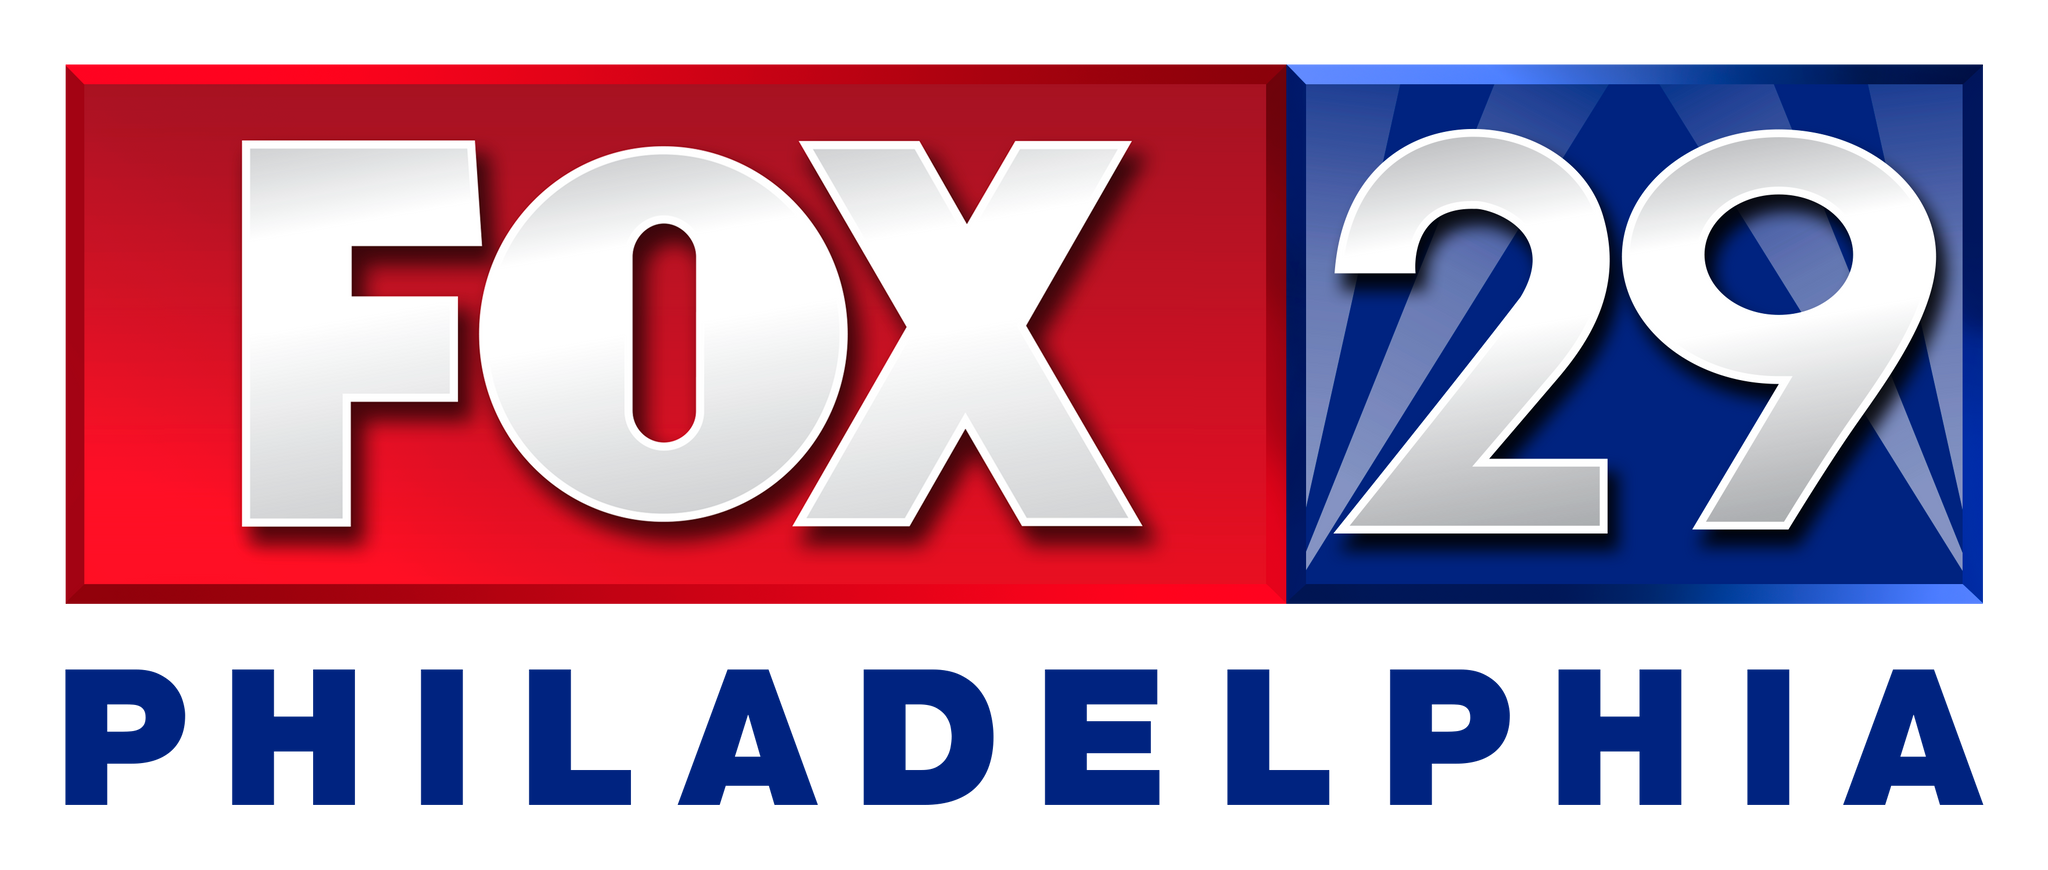 Fox канал прямой. Инком ТВ лого. Fox TV Station. Логотипы телеканалов округа Можга. Иконка Fox News.